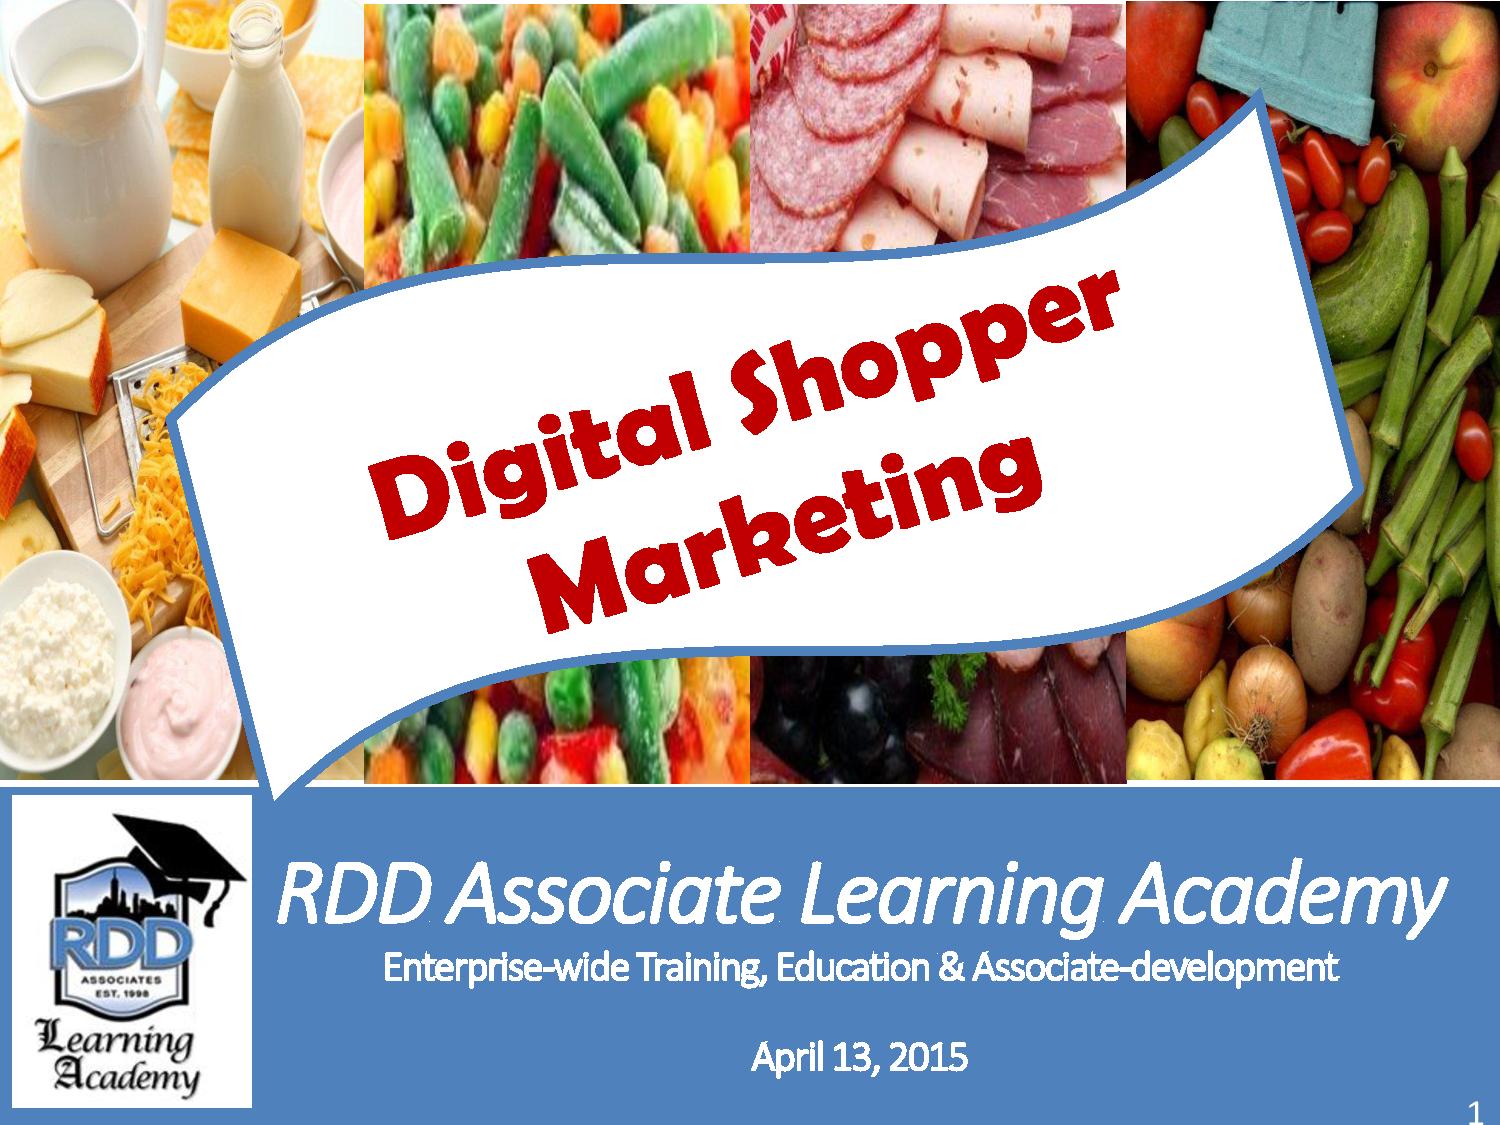 RDD Learning Academy_Digital Shopper Mktg 041315-page-001